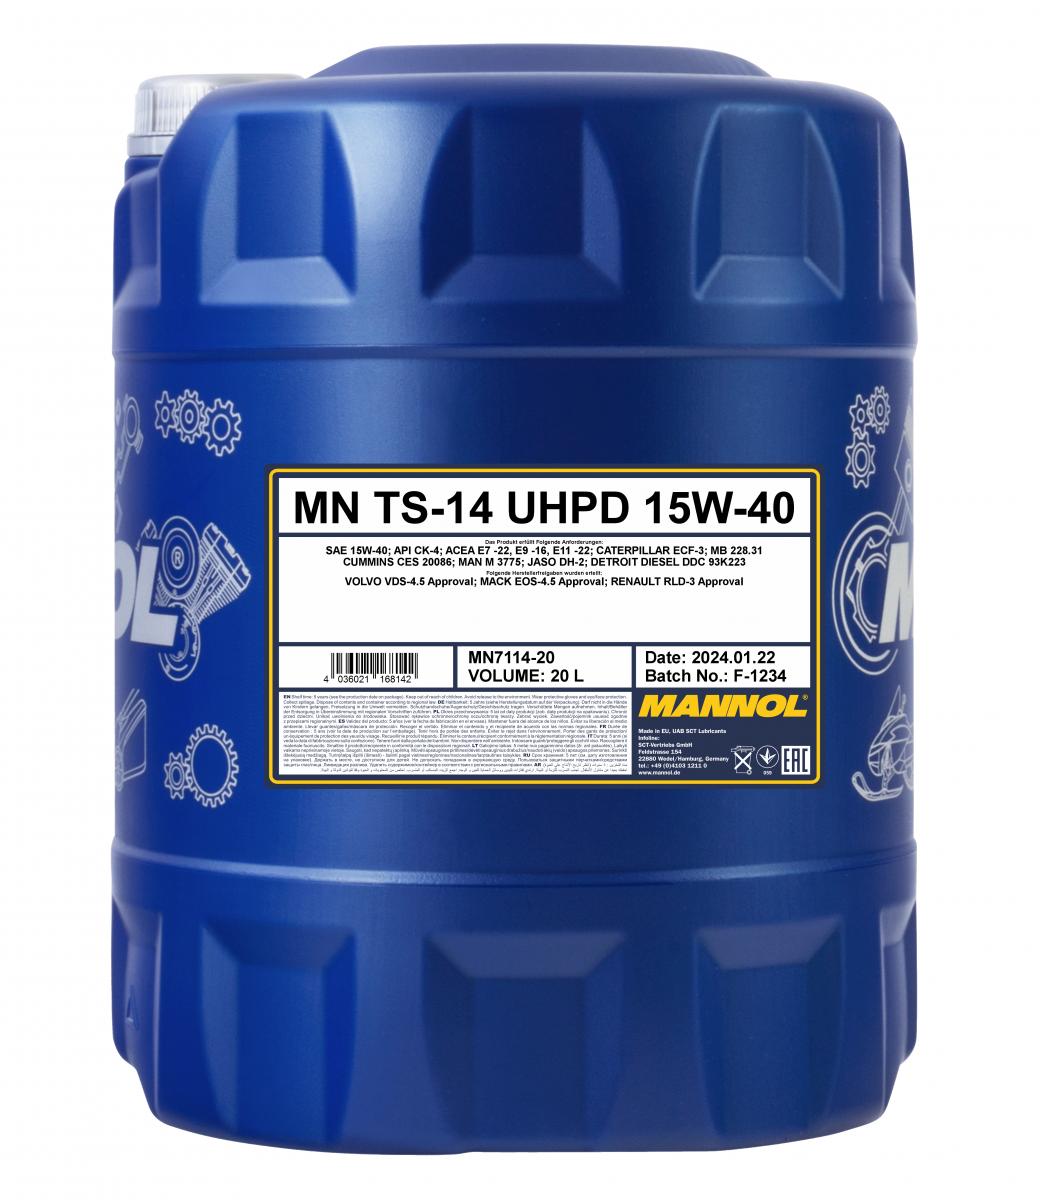 MN TS-14 UHPD 15W-40